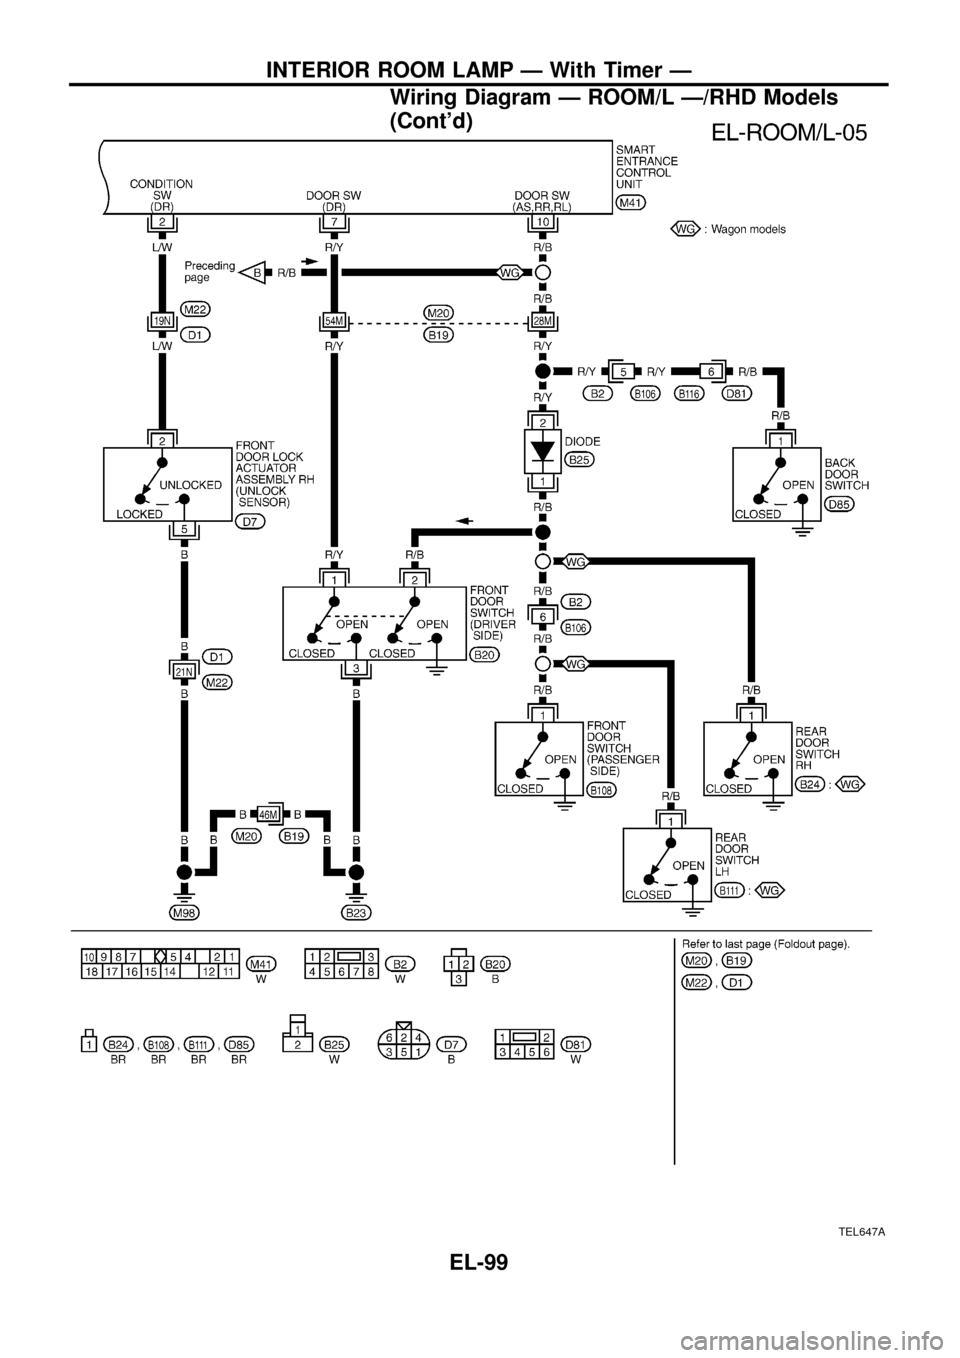 NISSAN PATROL 1998 Y61 / 5.G Electrical System Service Manual TEL647A
INTERIOR ROOM LAMP Ð With Timer Ð
Wiring Diagram Ð ROOM/L Ð/RHD Models
(Contd)
EL-99 